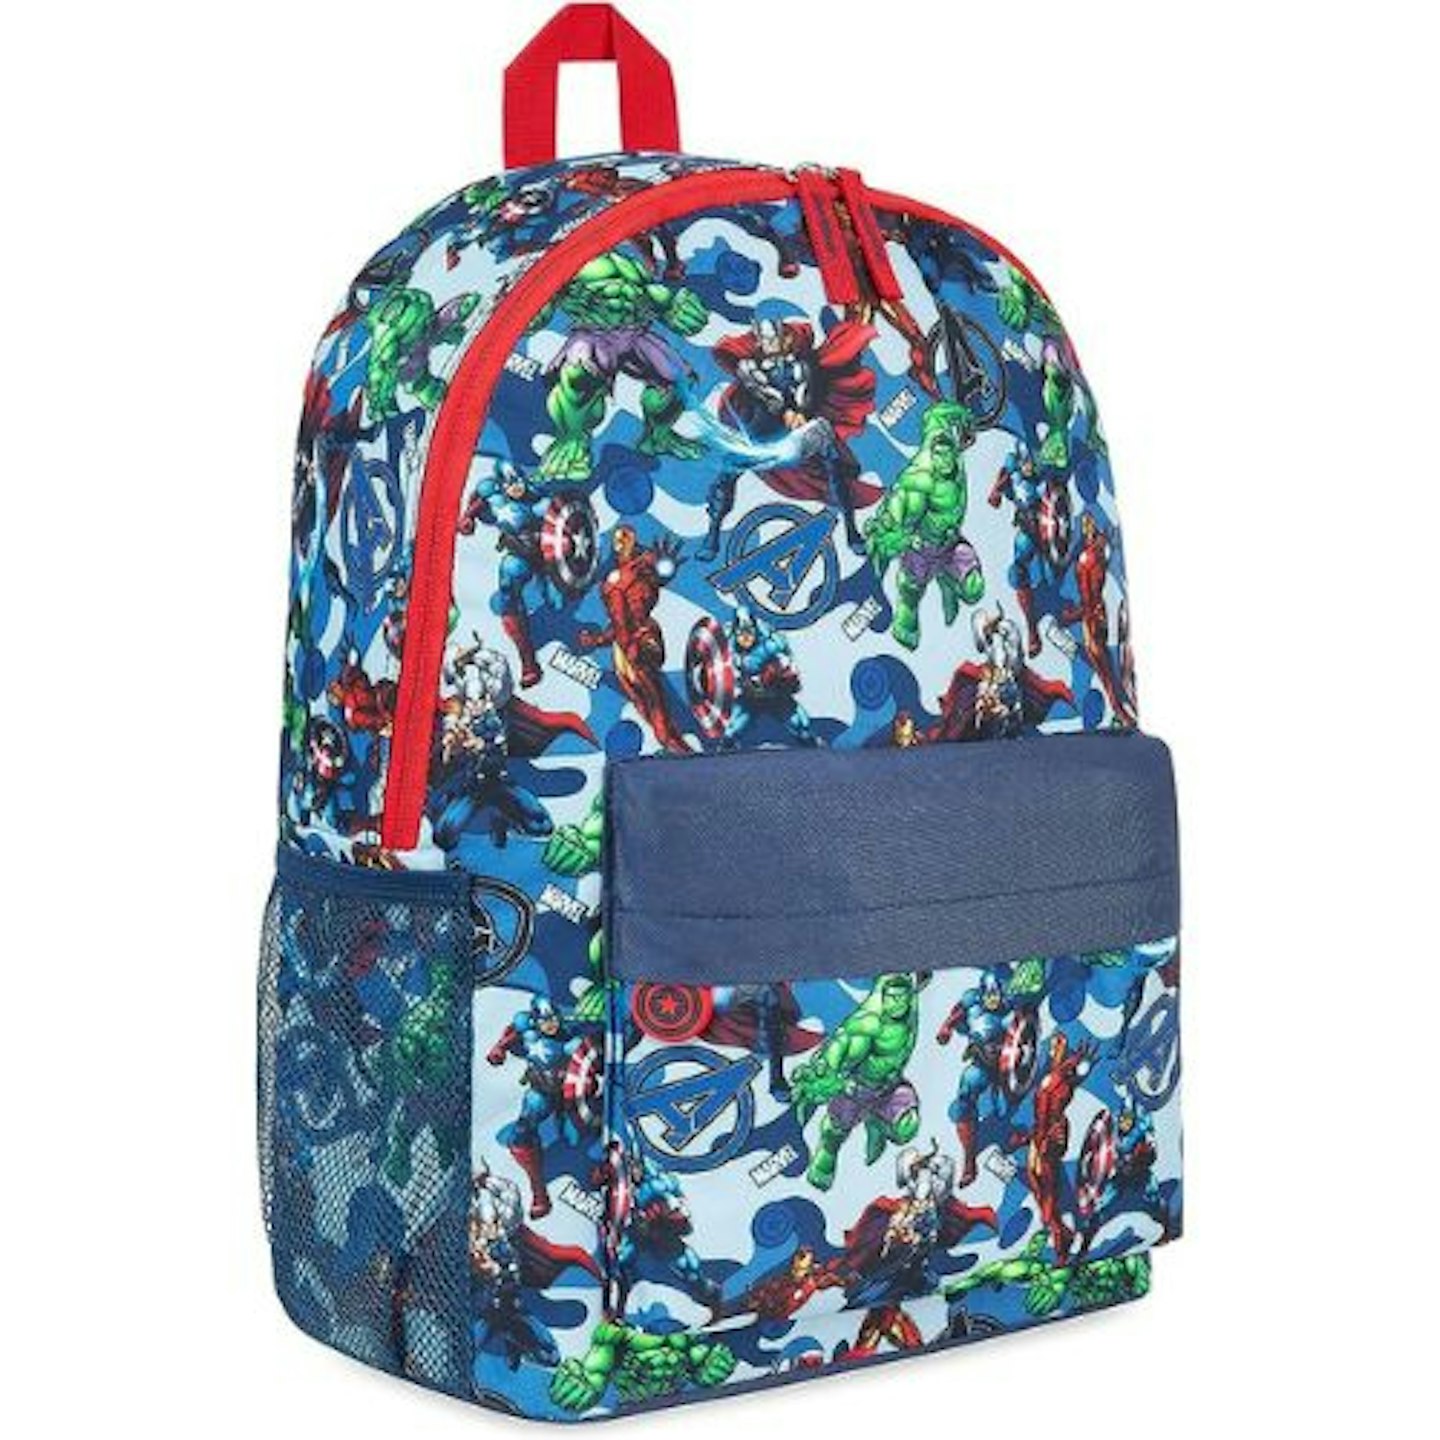 Best back to school backpacks Marvel Backpack